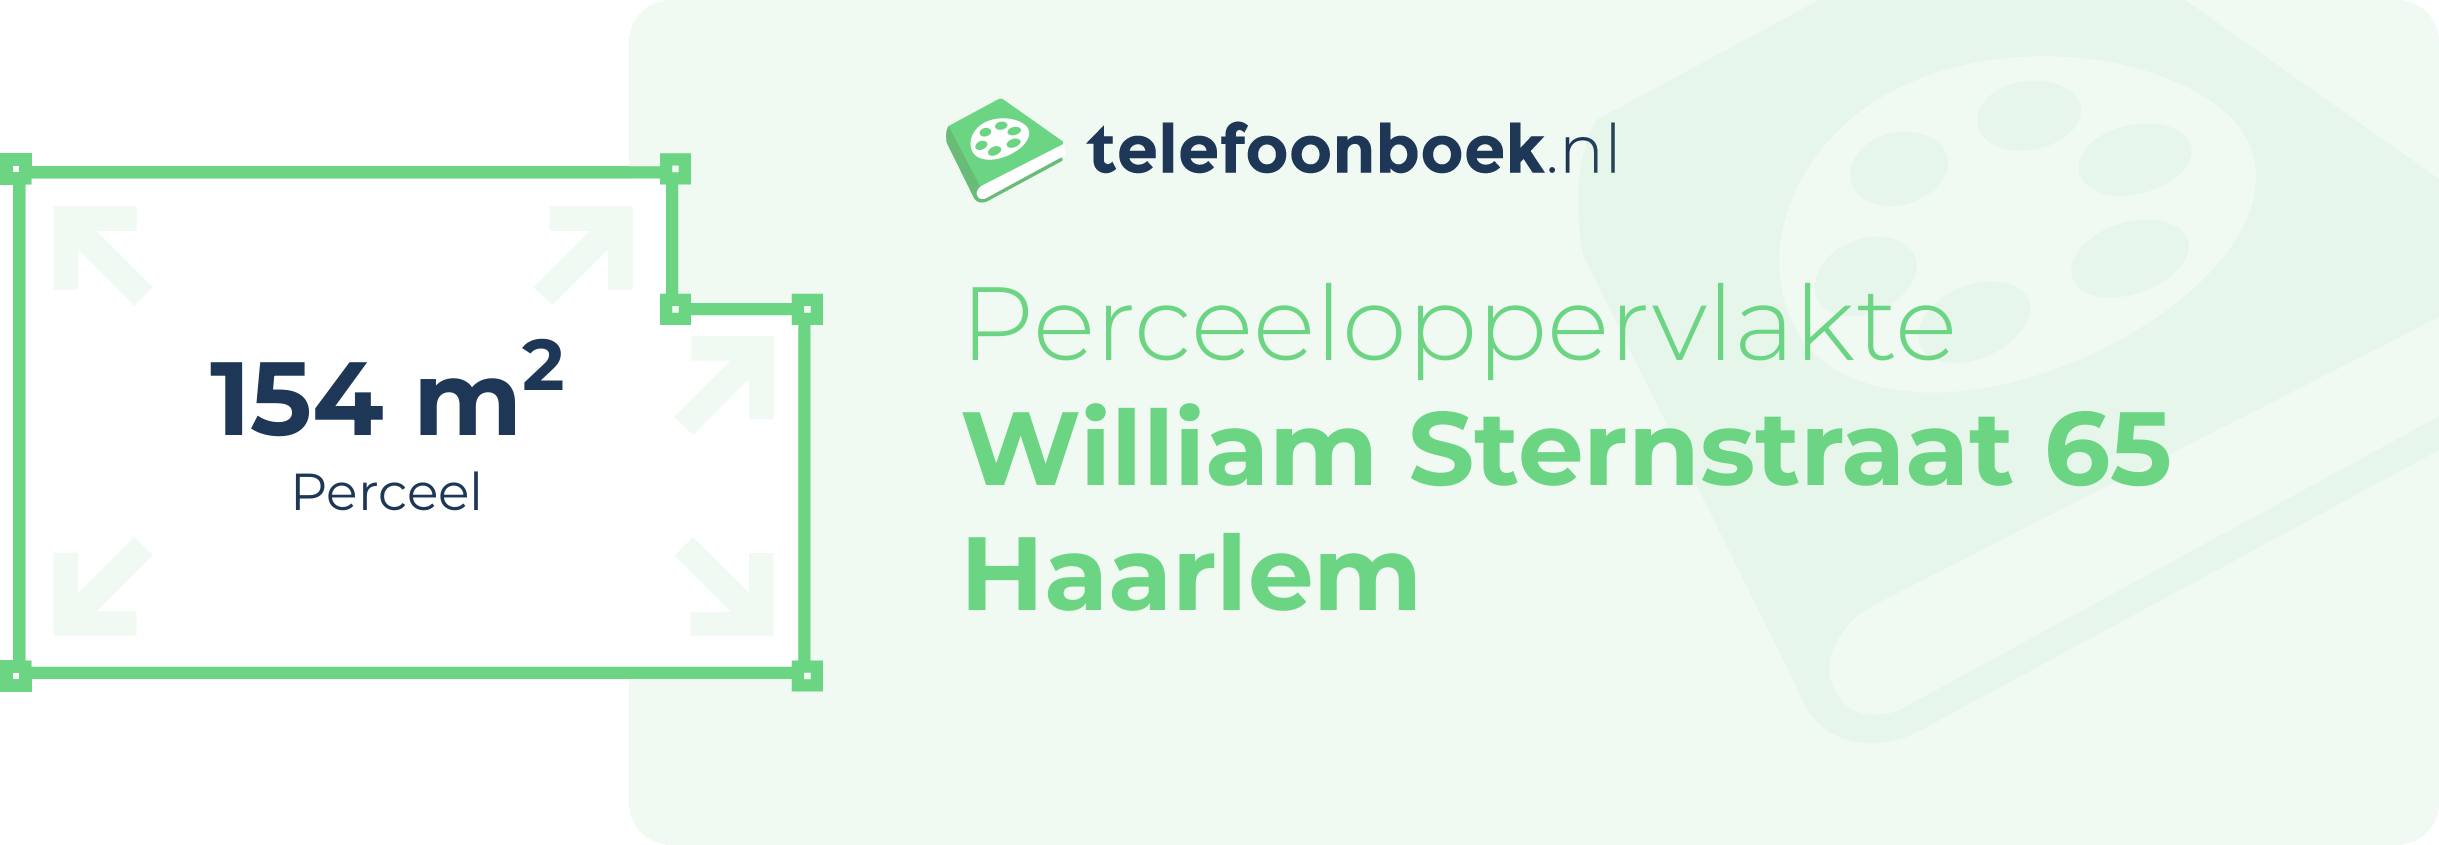 Perceeloppervlakte William Sternstraat 65 Haarlem